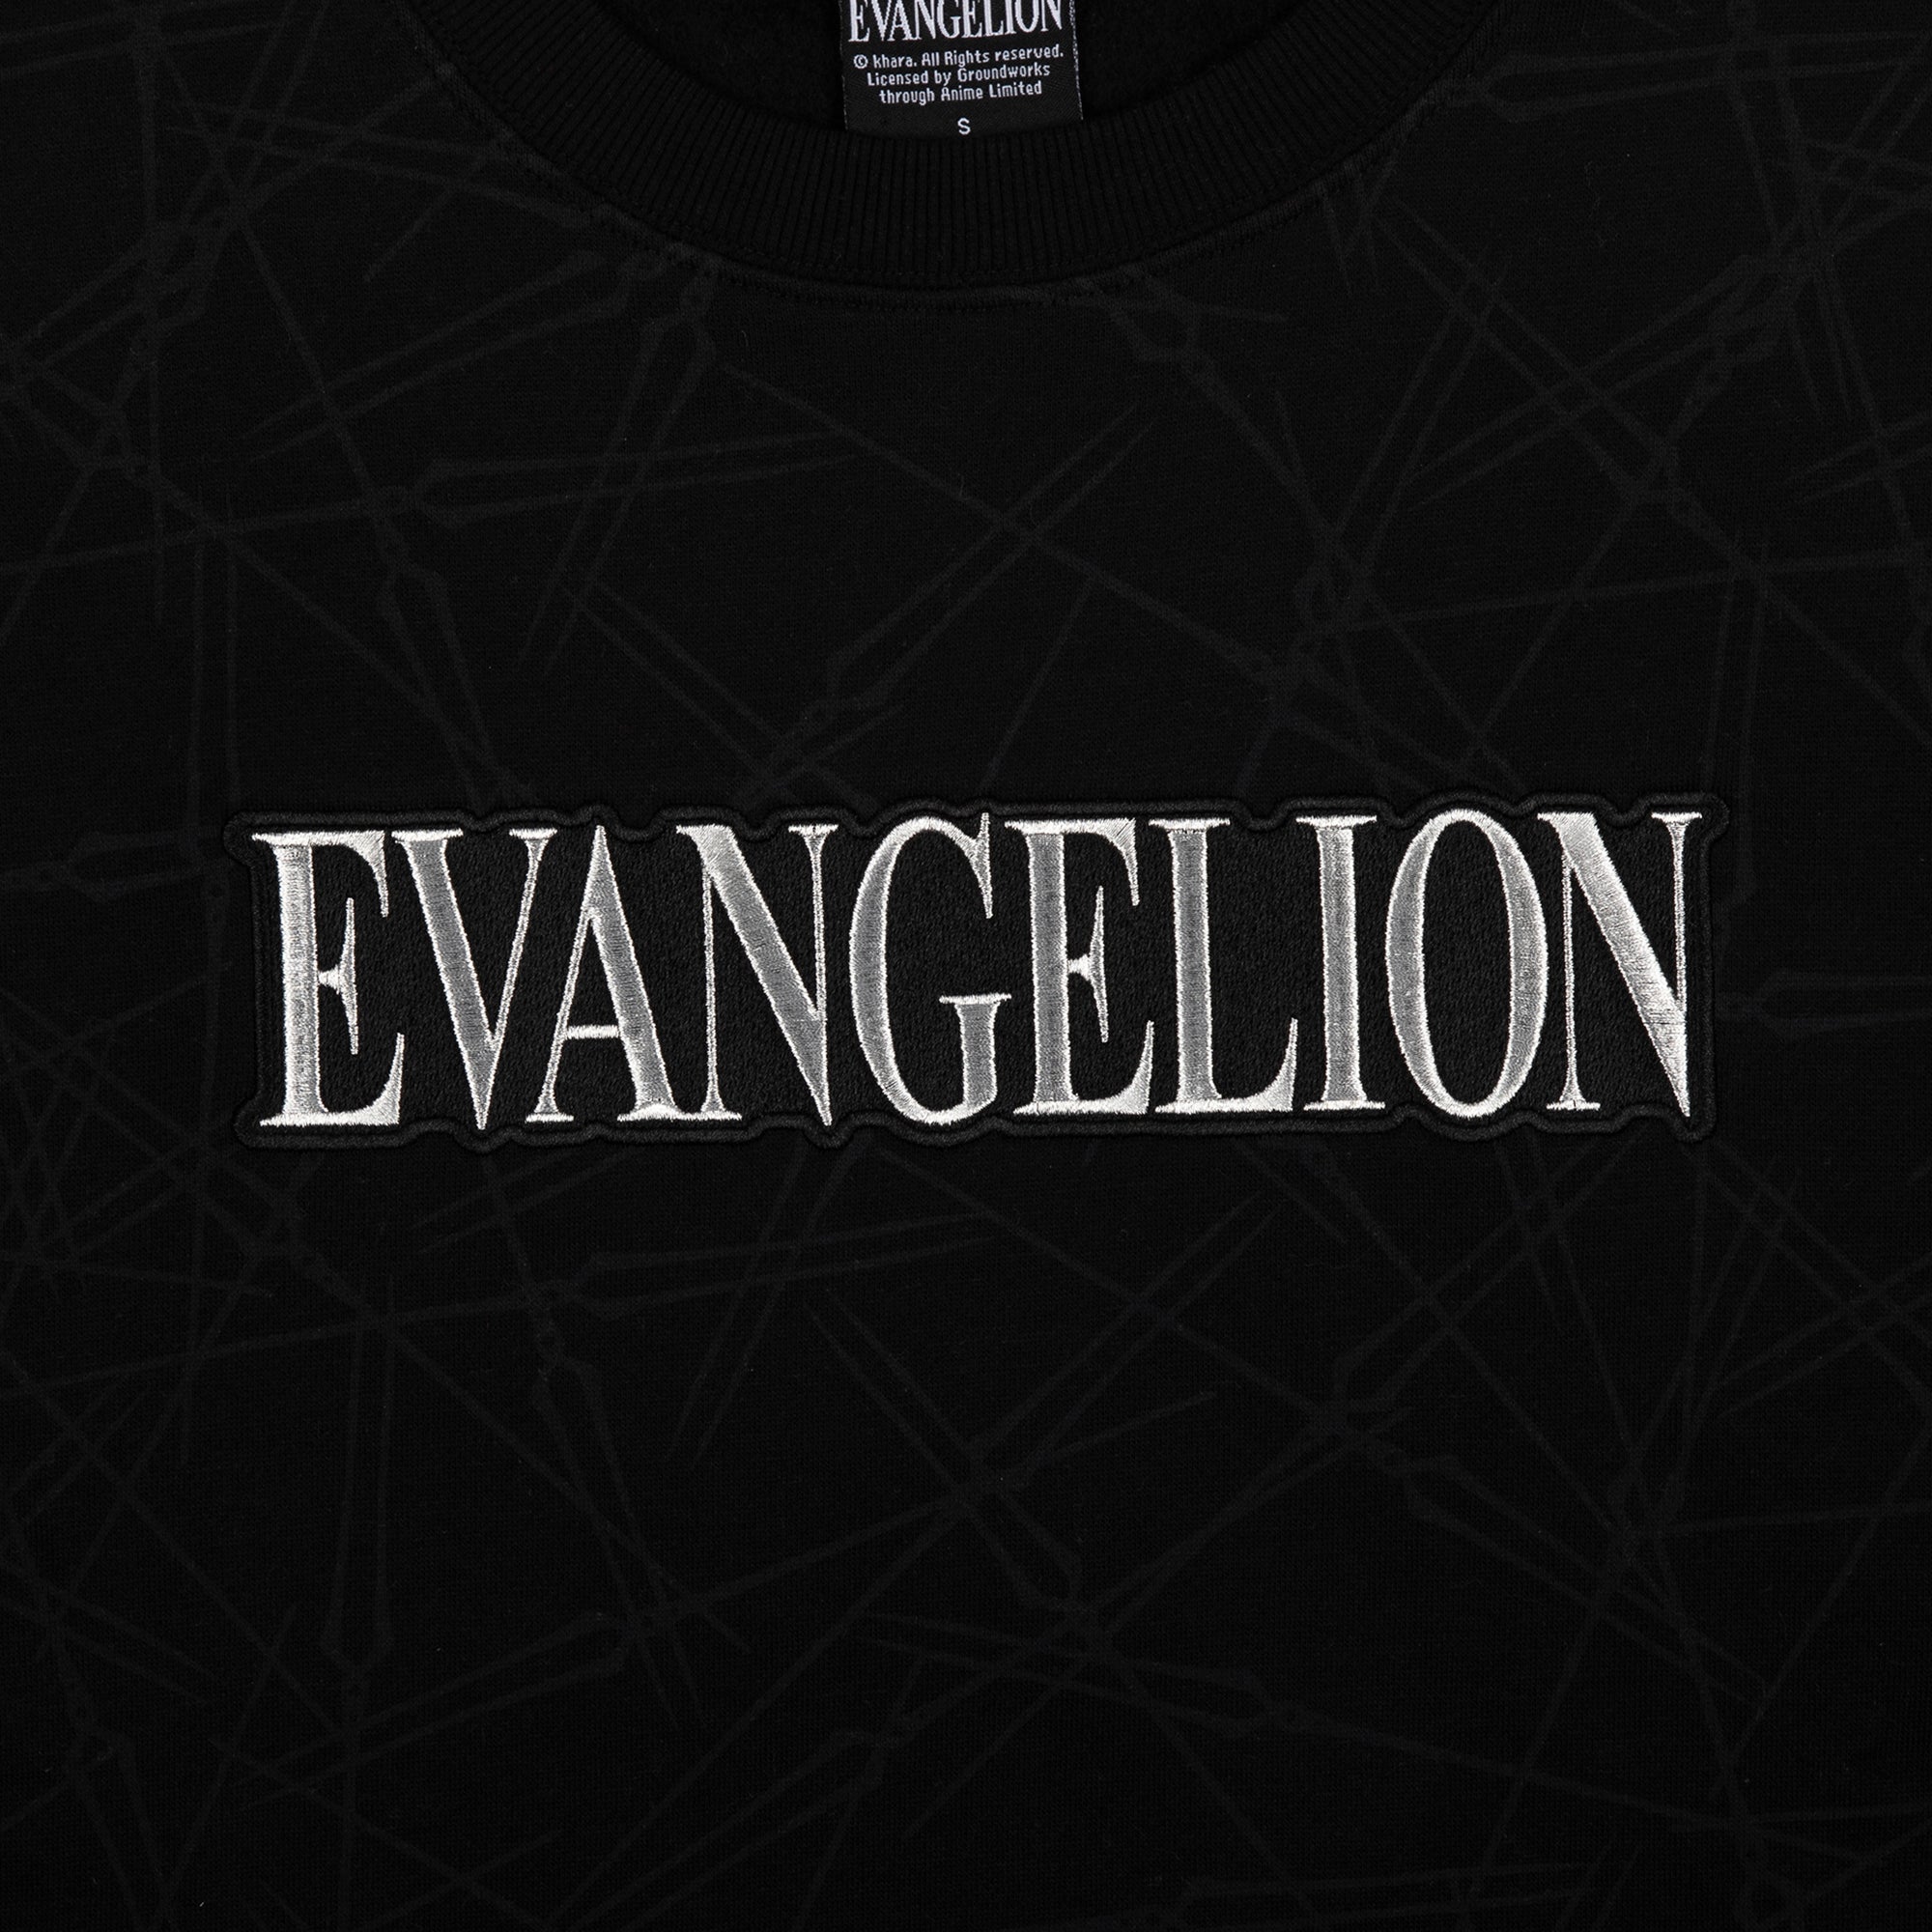 Evangelion Black Crew Neck Sweatshirt